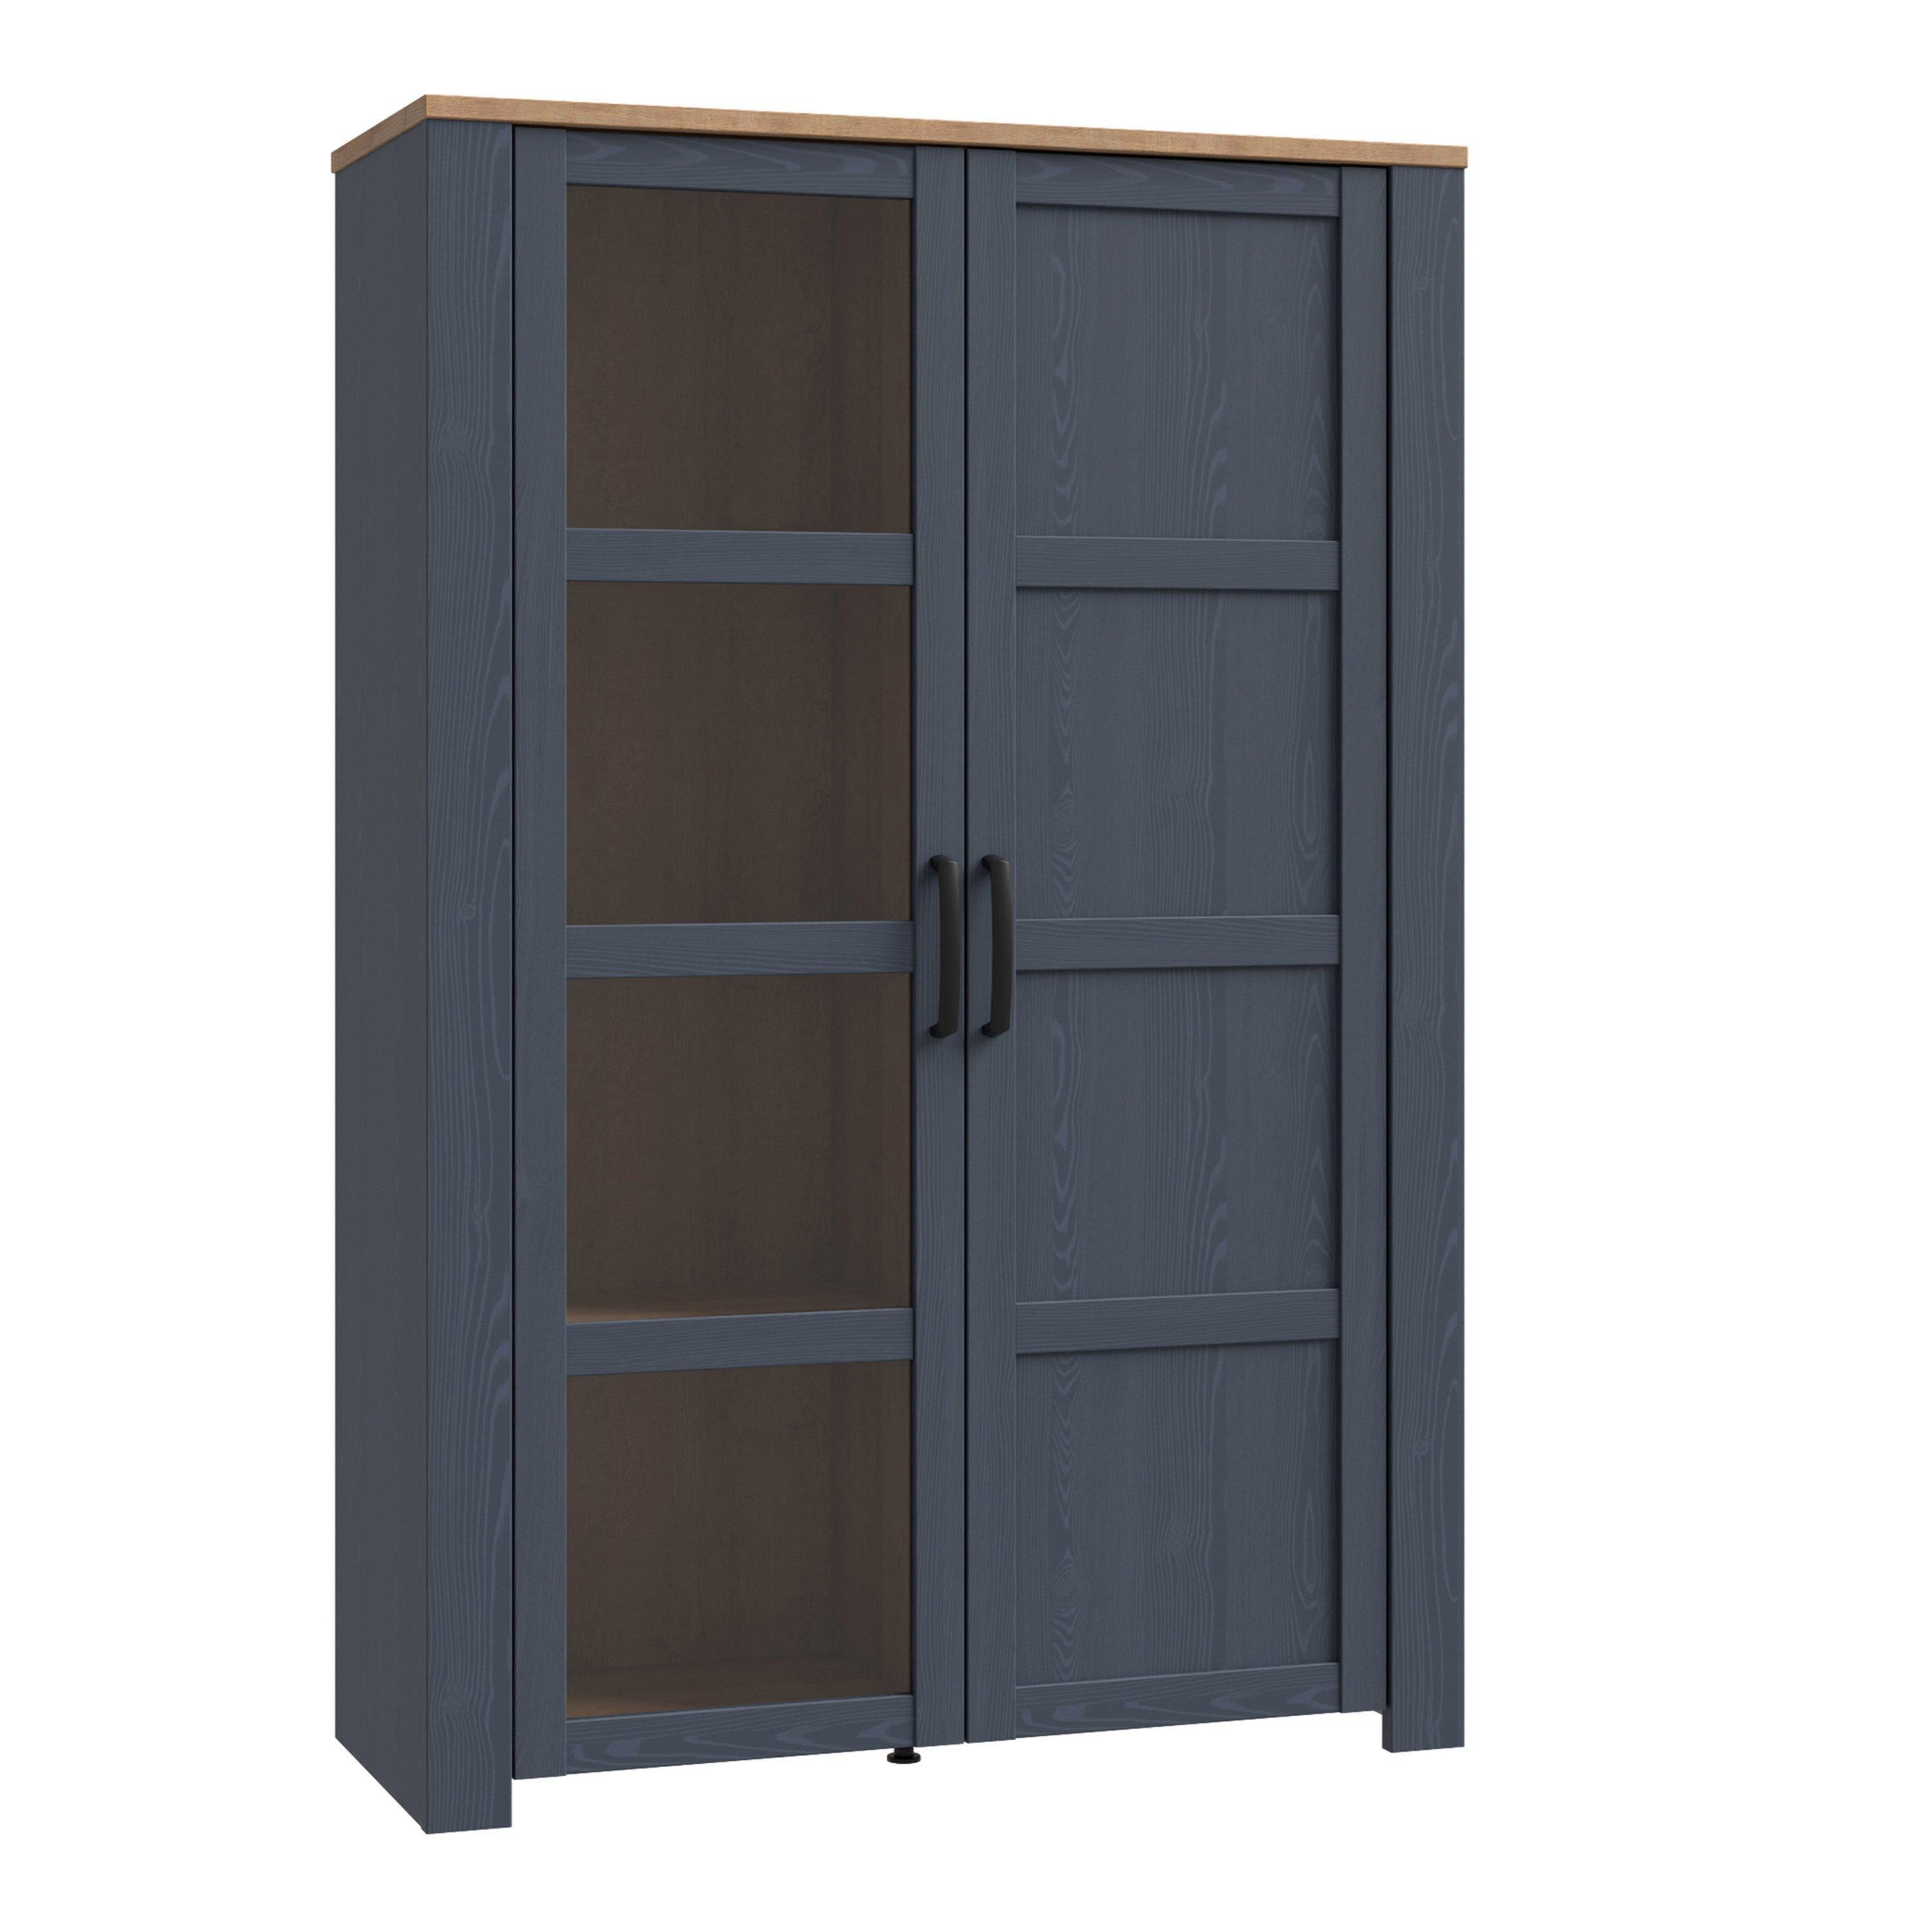 Bohol Display Cabinet - image 1